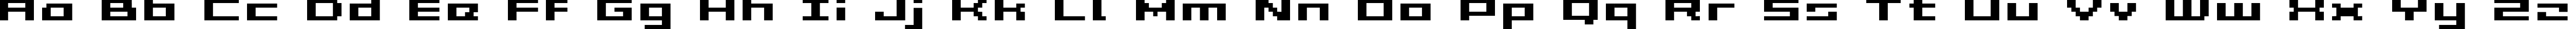 Пример написания английского алфавита шрифтом Grixel Acme 5 Wide Bold Xtnd